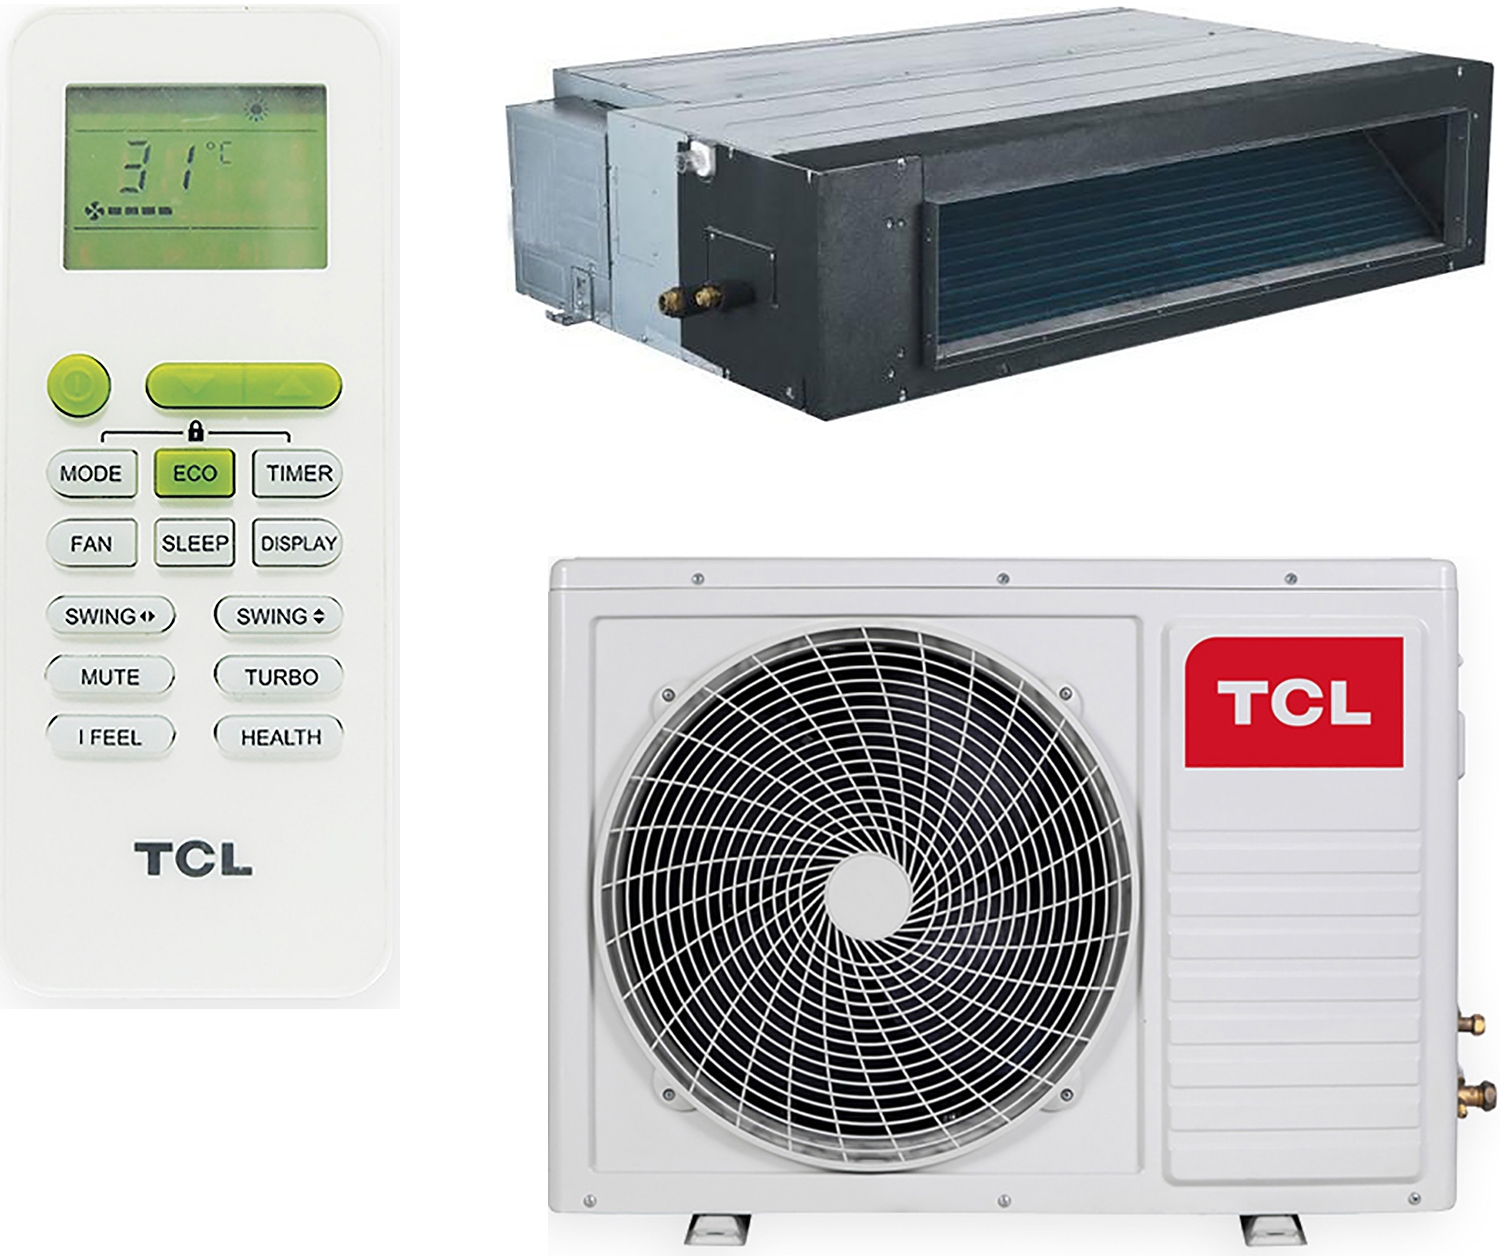 Кондиционер сплит-система TCL TCA-24D2HRA/DVI/TCA-24HA/DVO в интернет-магазине, главное фото